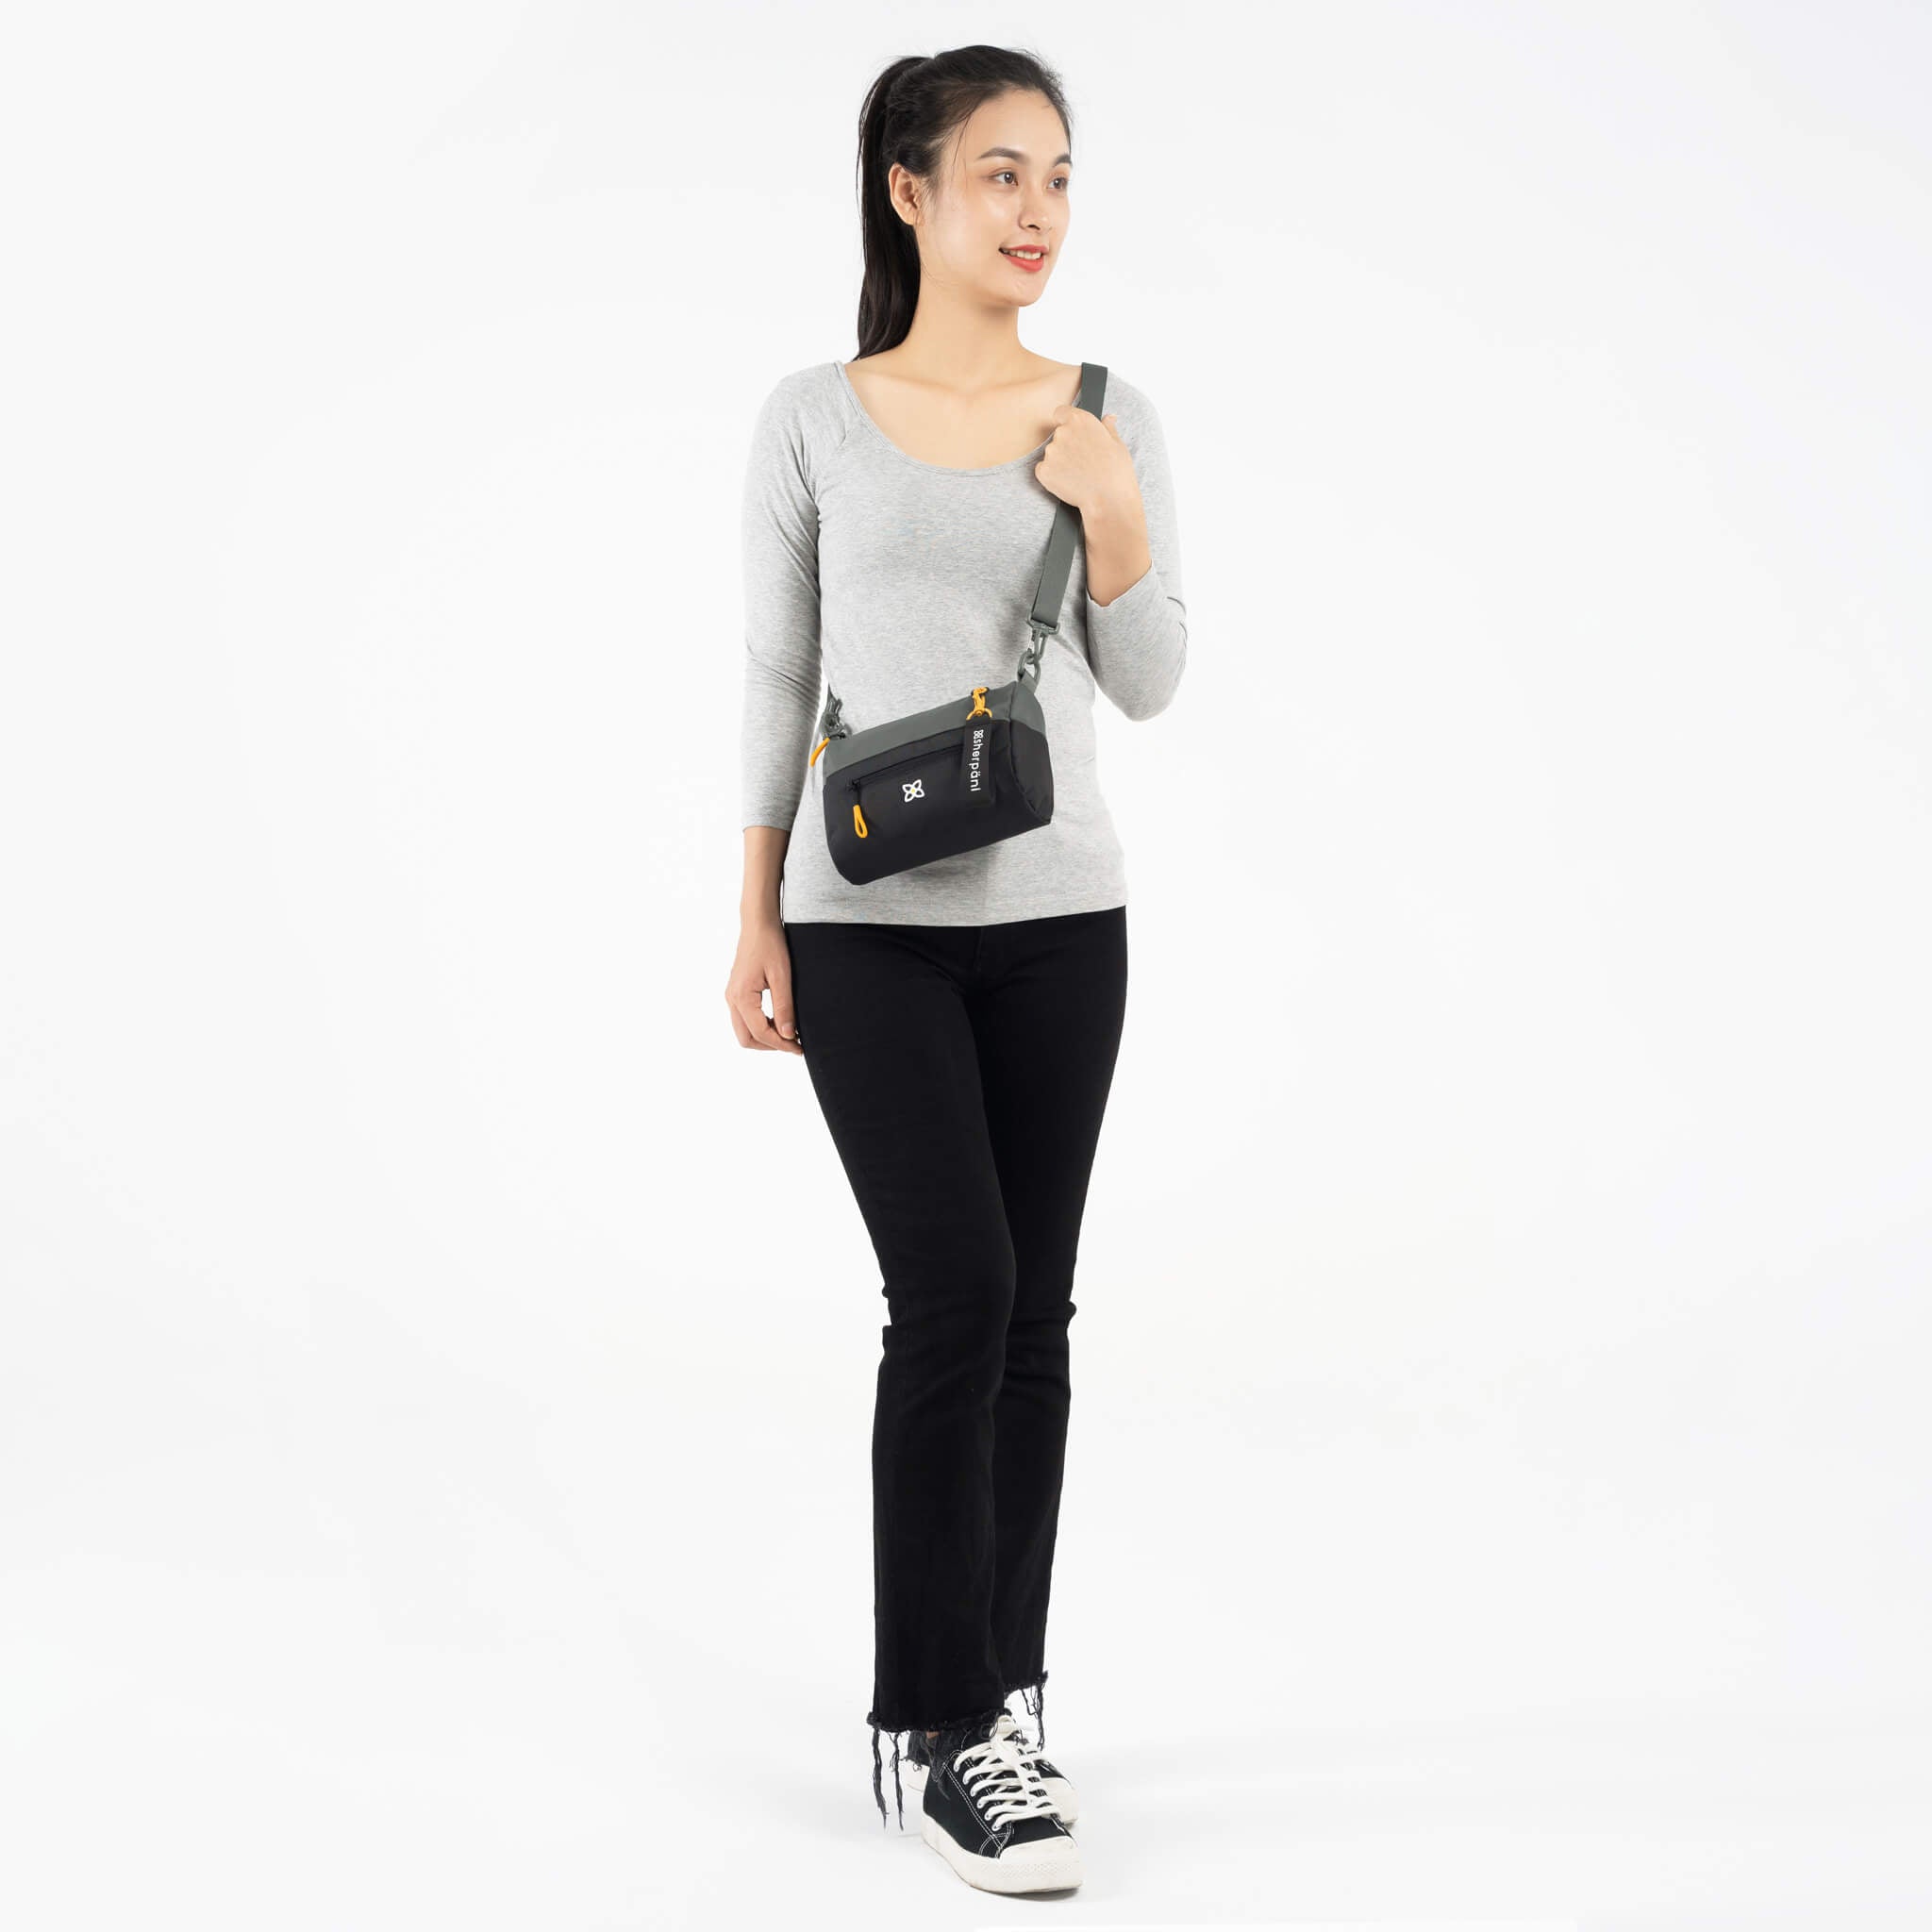 A model wearing Sherpani RFID blocking purse, the Skye in Juniper, as a crossbody bag.